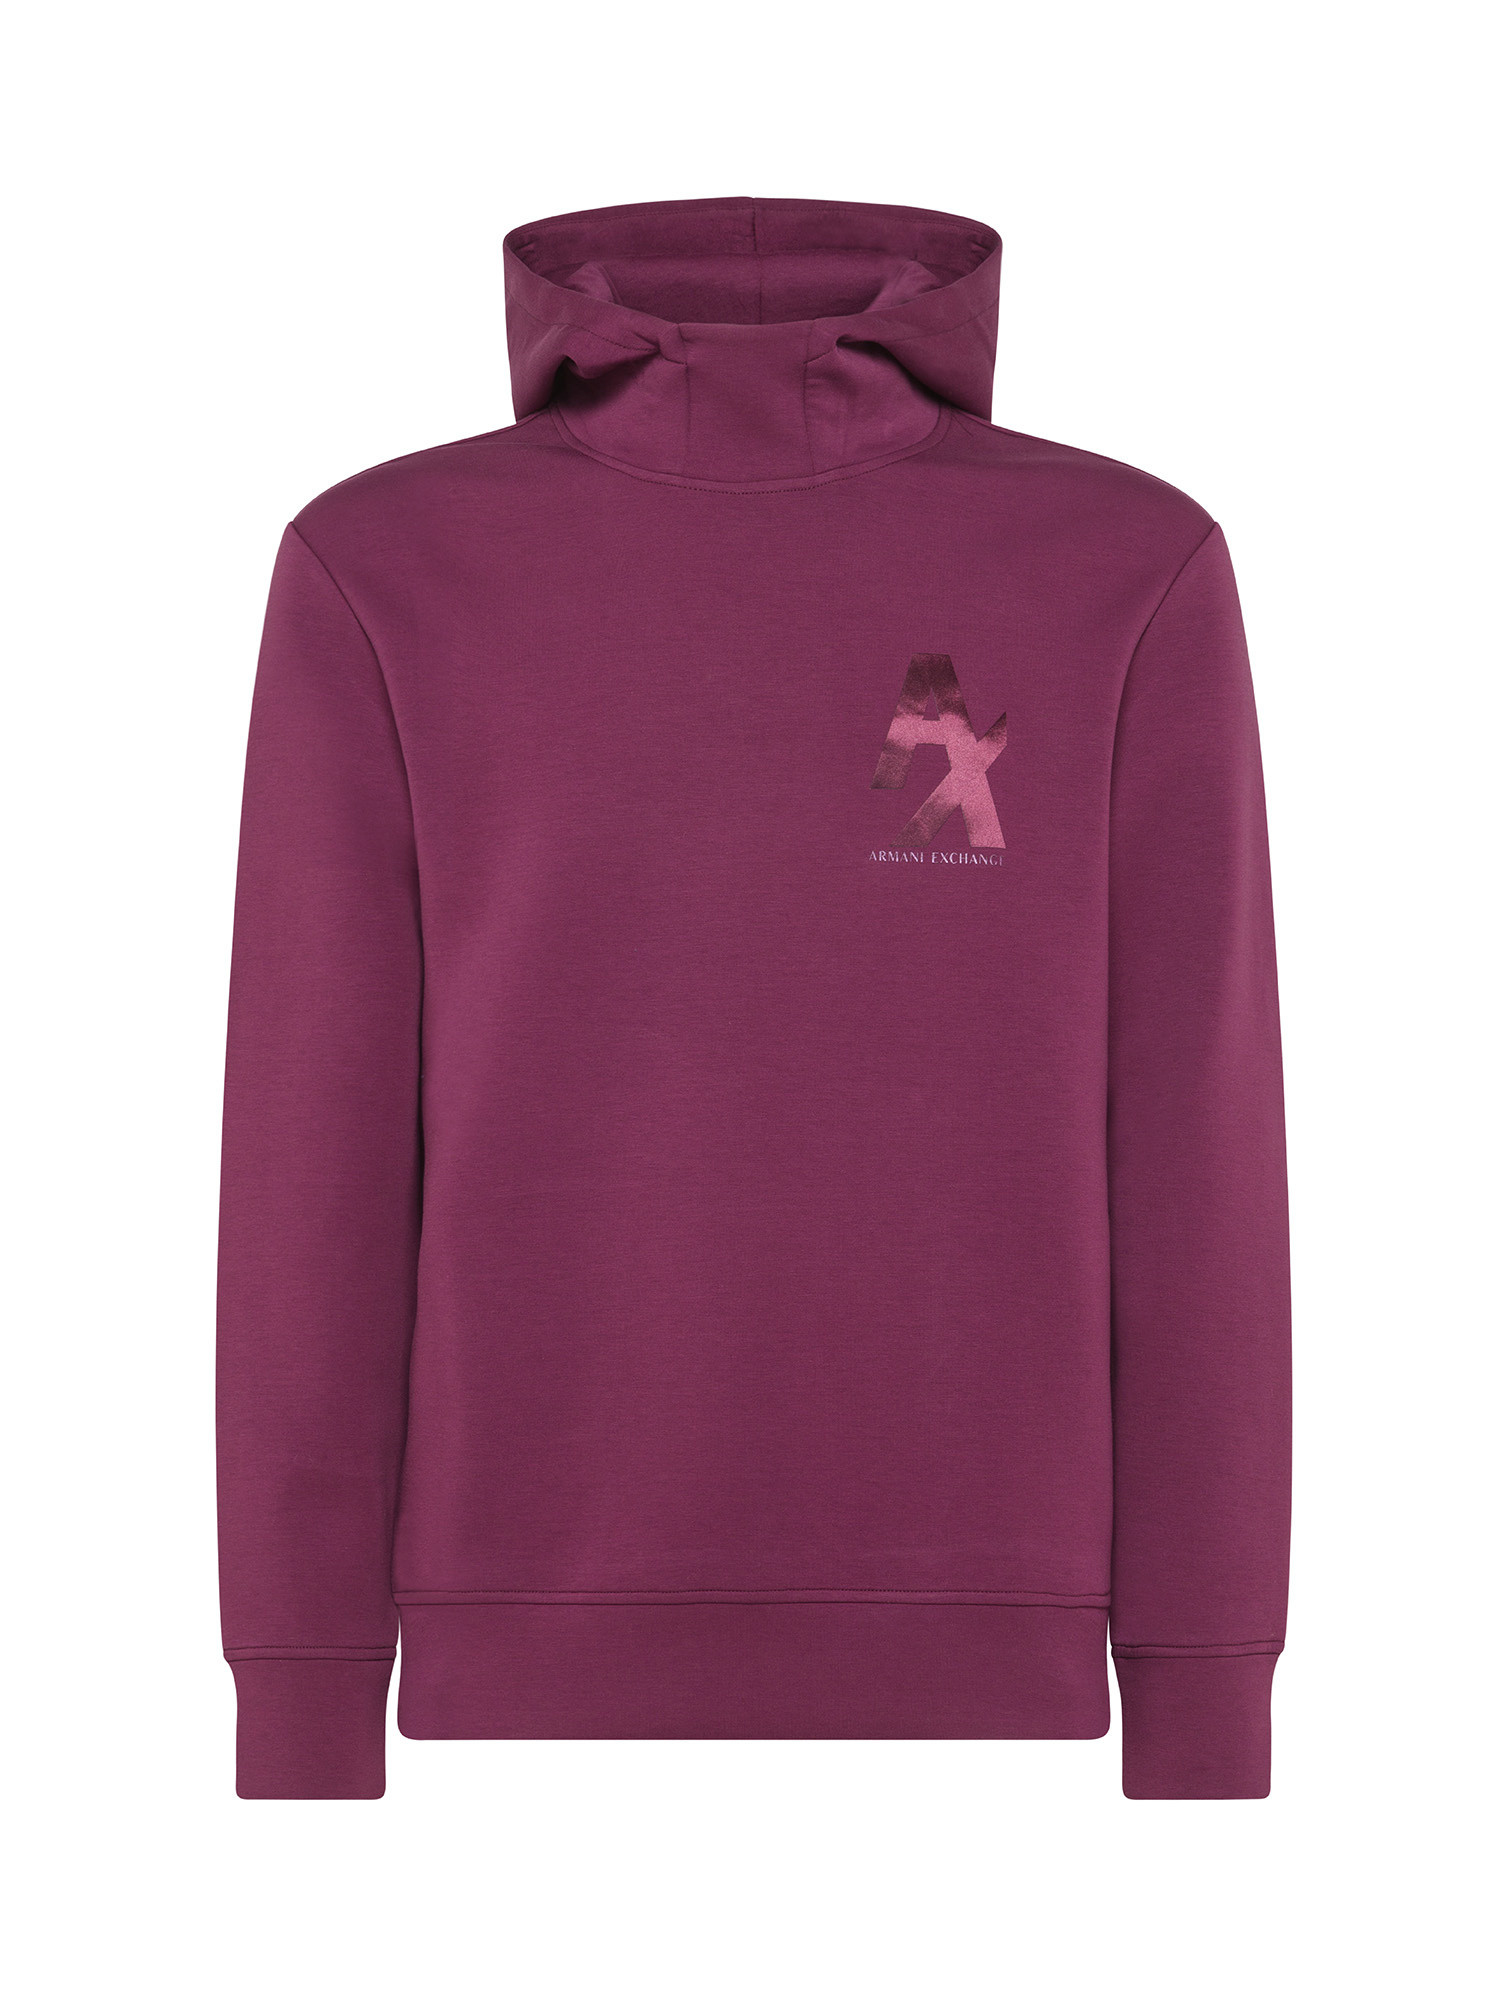 Armani Exchange - Sweatshirt with hood and logo, Red Bordeaux, large image number 0